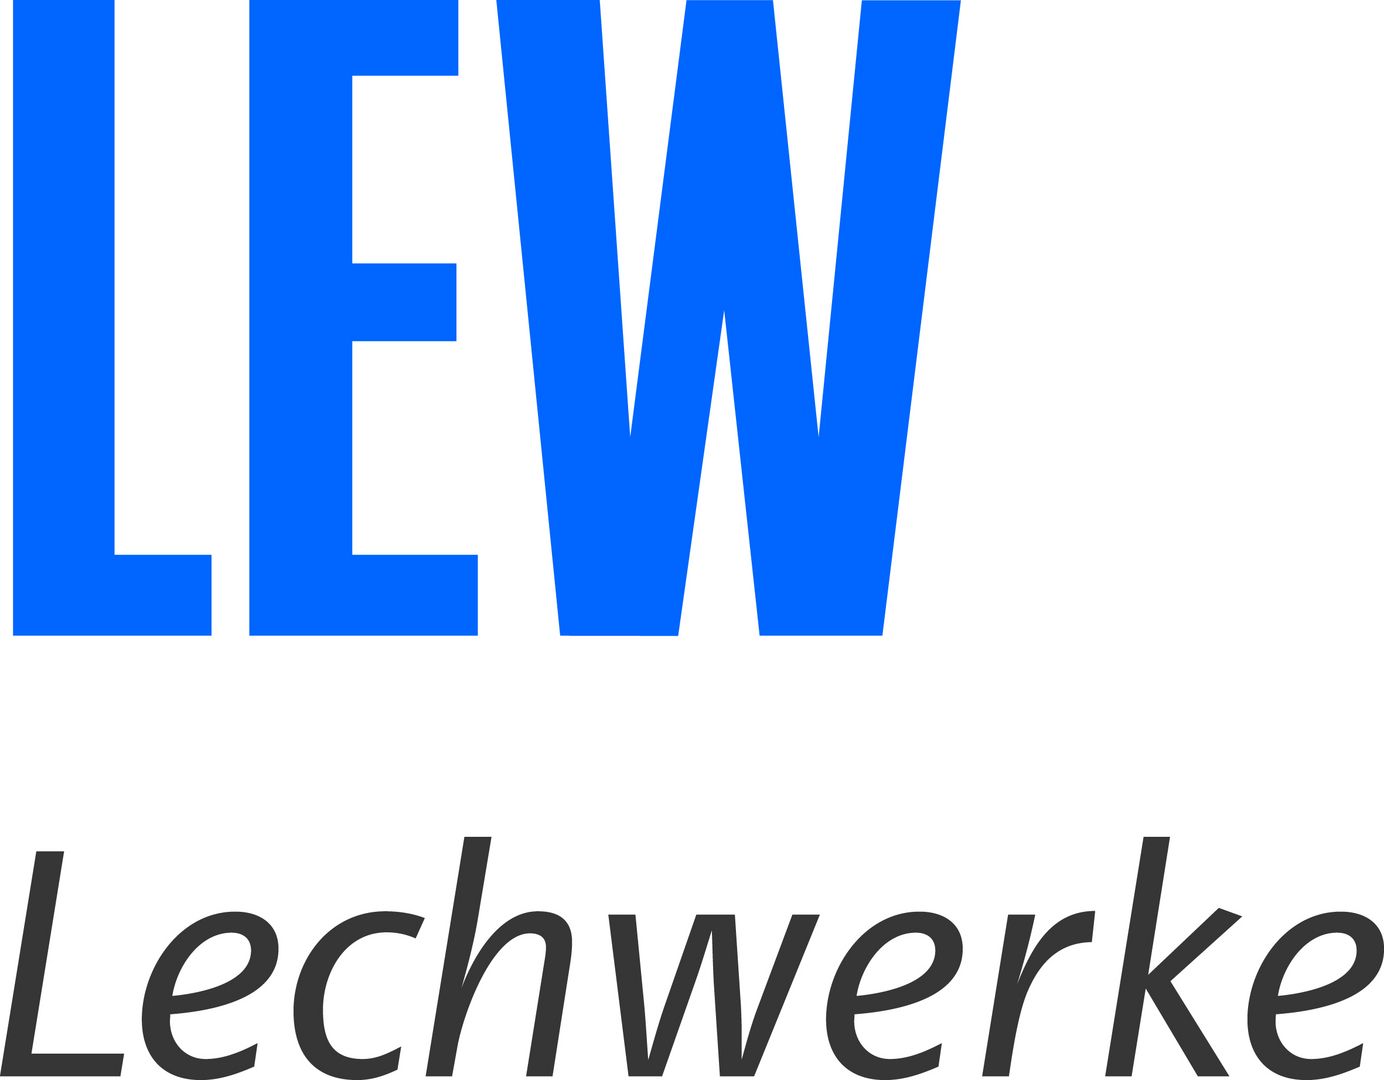 Lechwerke AG (LEW)